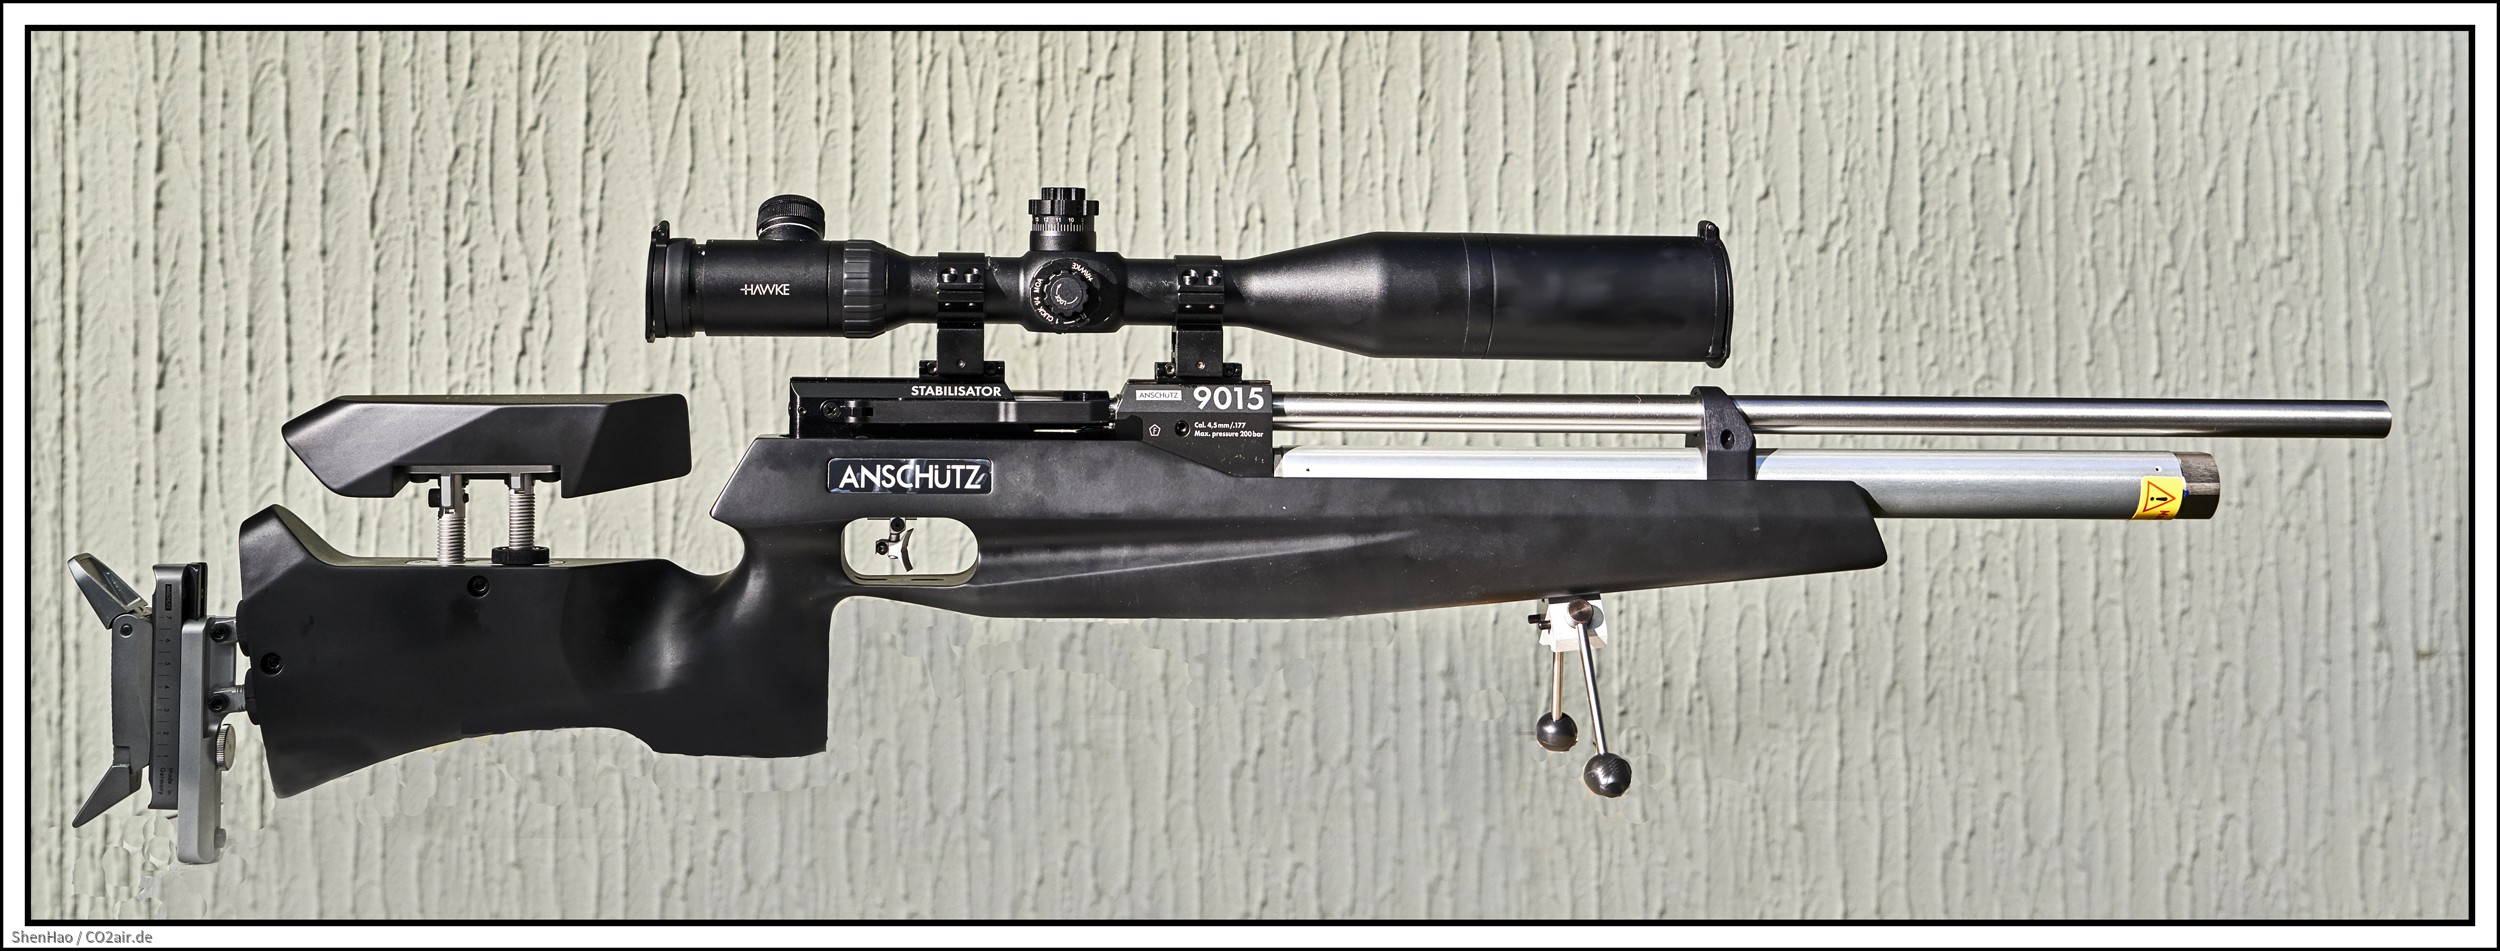 Anschütz "9015 Black Air", Hawke ZF (#13310) 4-16X50 SF, verstellbare Schaftkappe und Schaftbacke, MEC Bi-pod